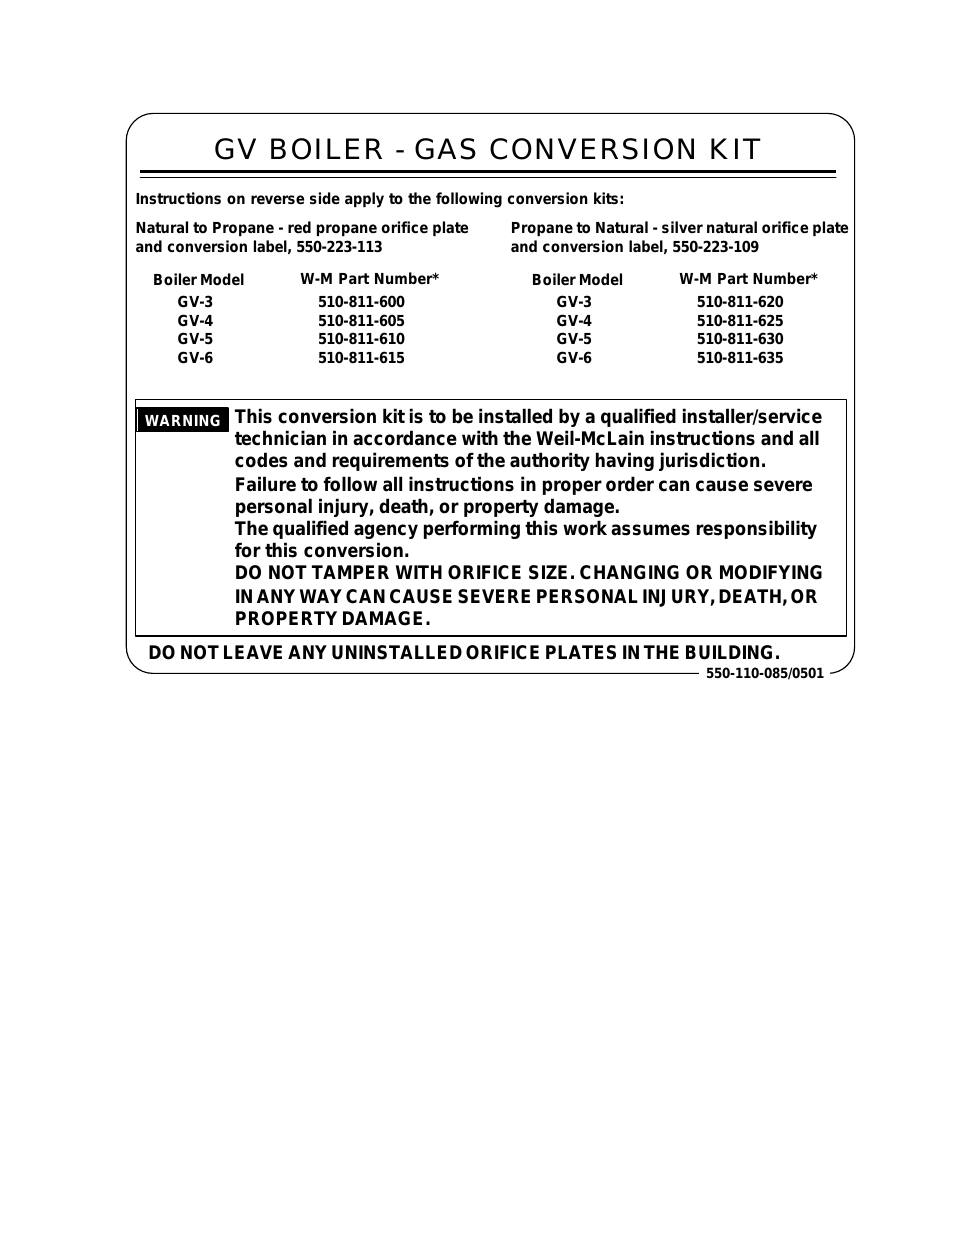 GAS CONVERSION KIT GV-3 510-811-600